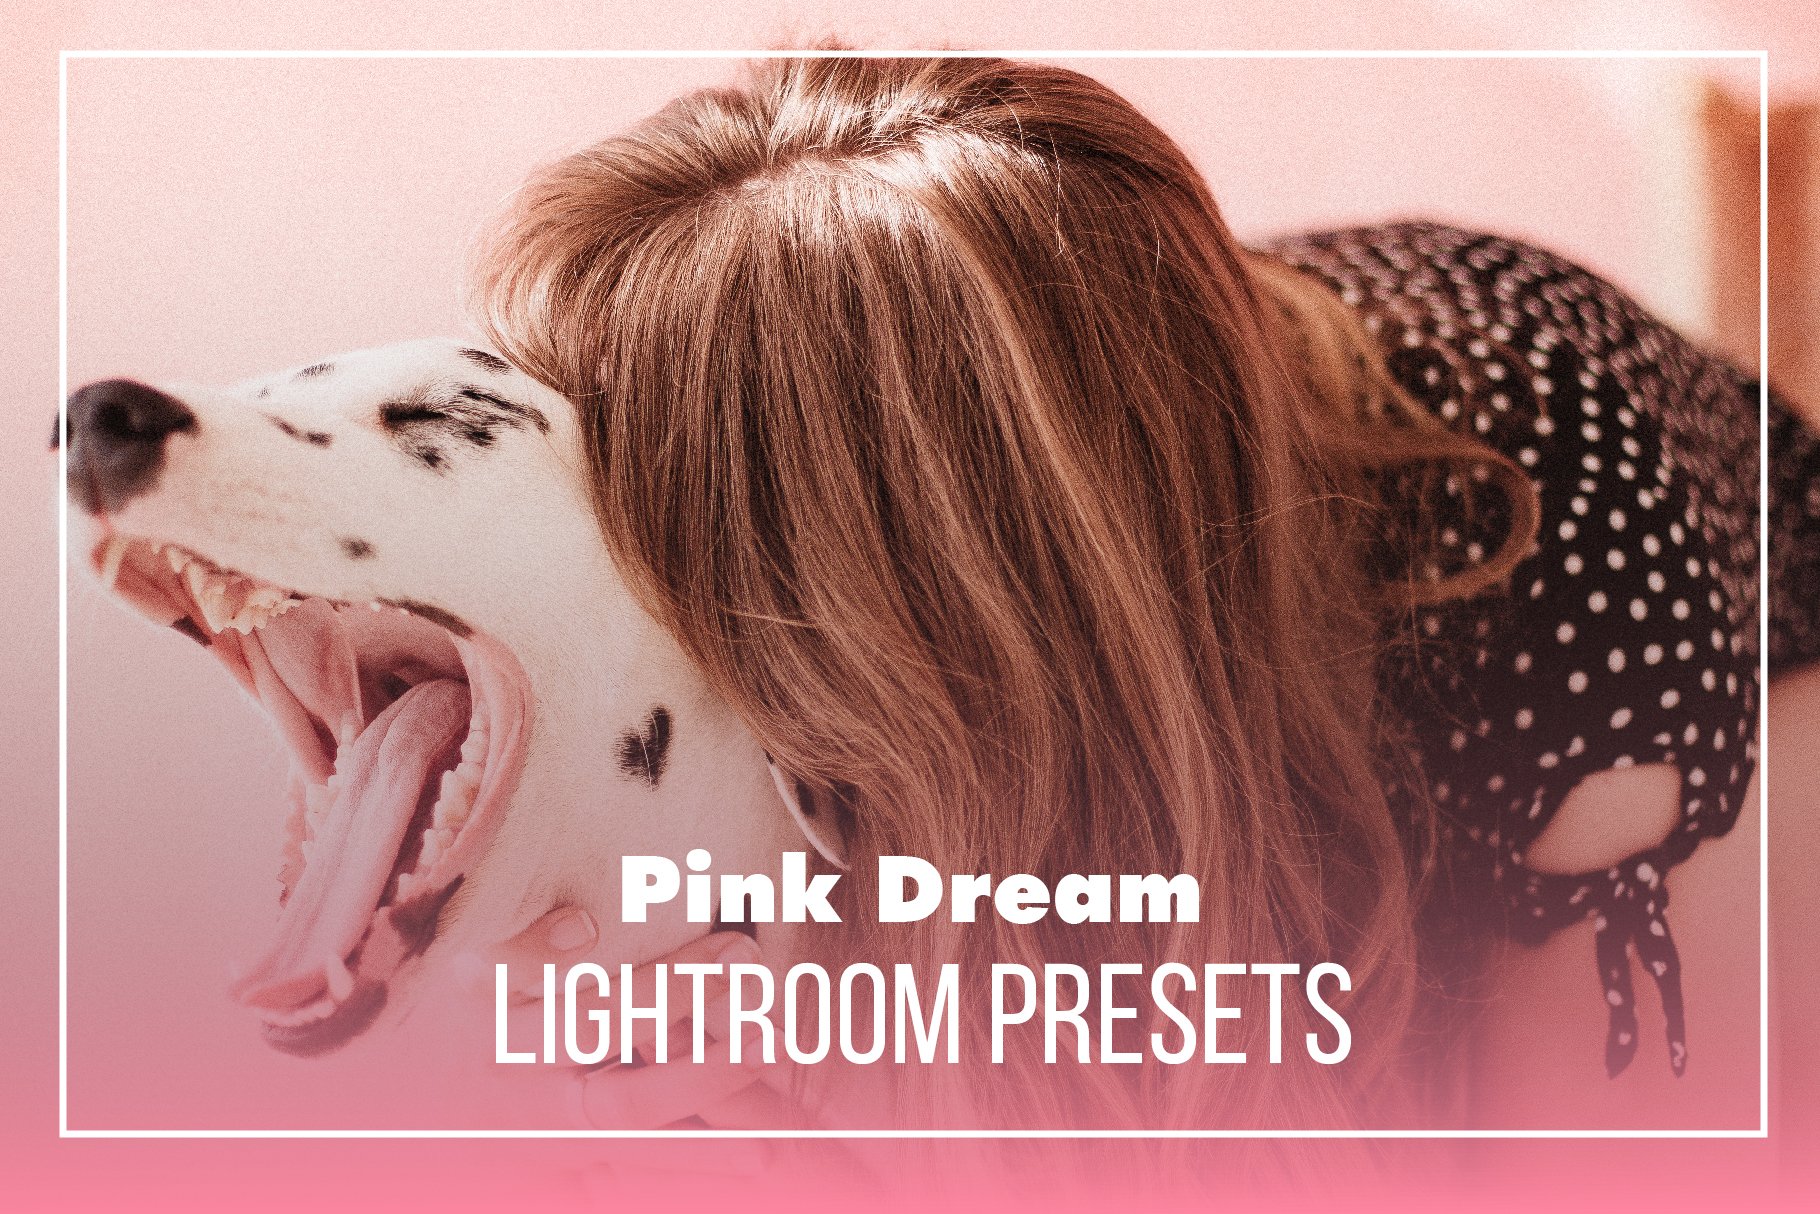 Pink Dream Lightroom Presetscover image.